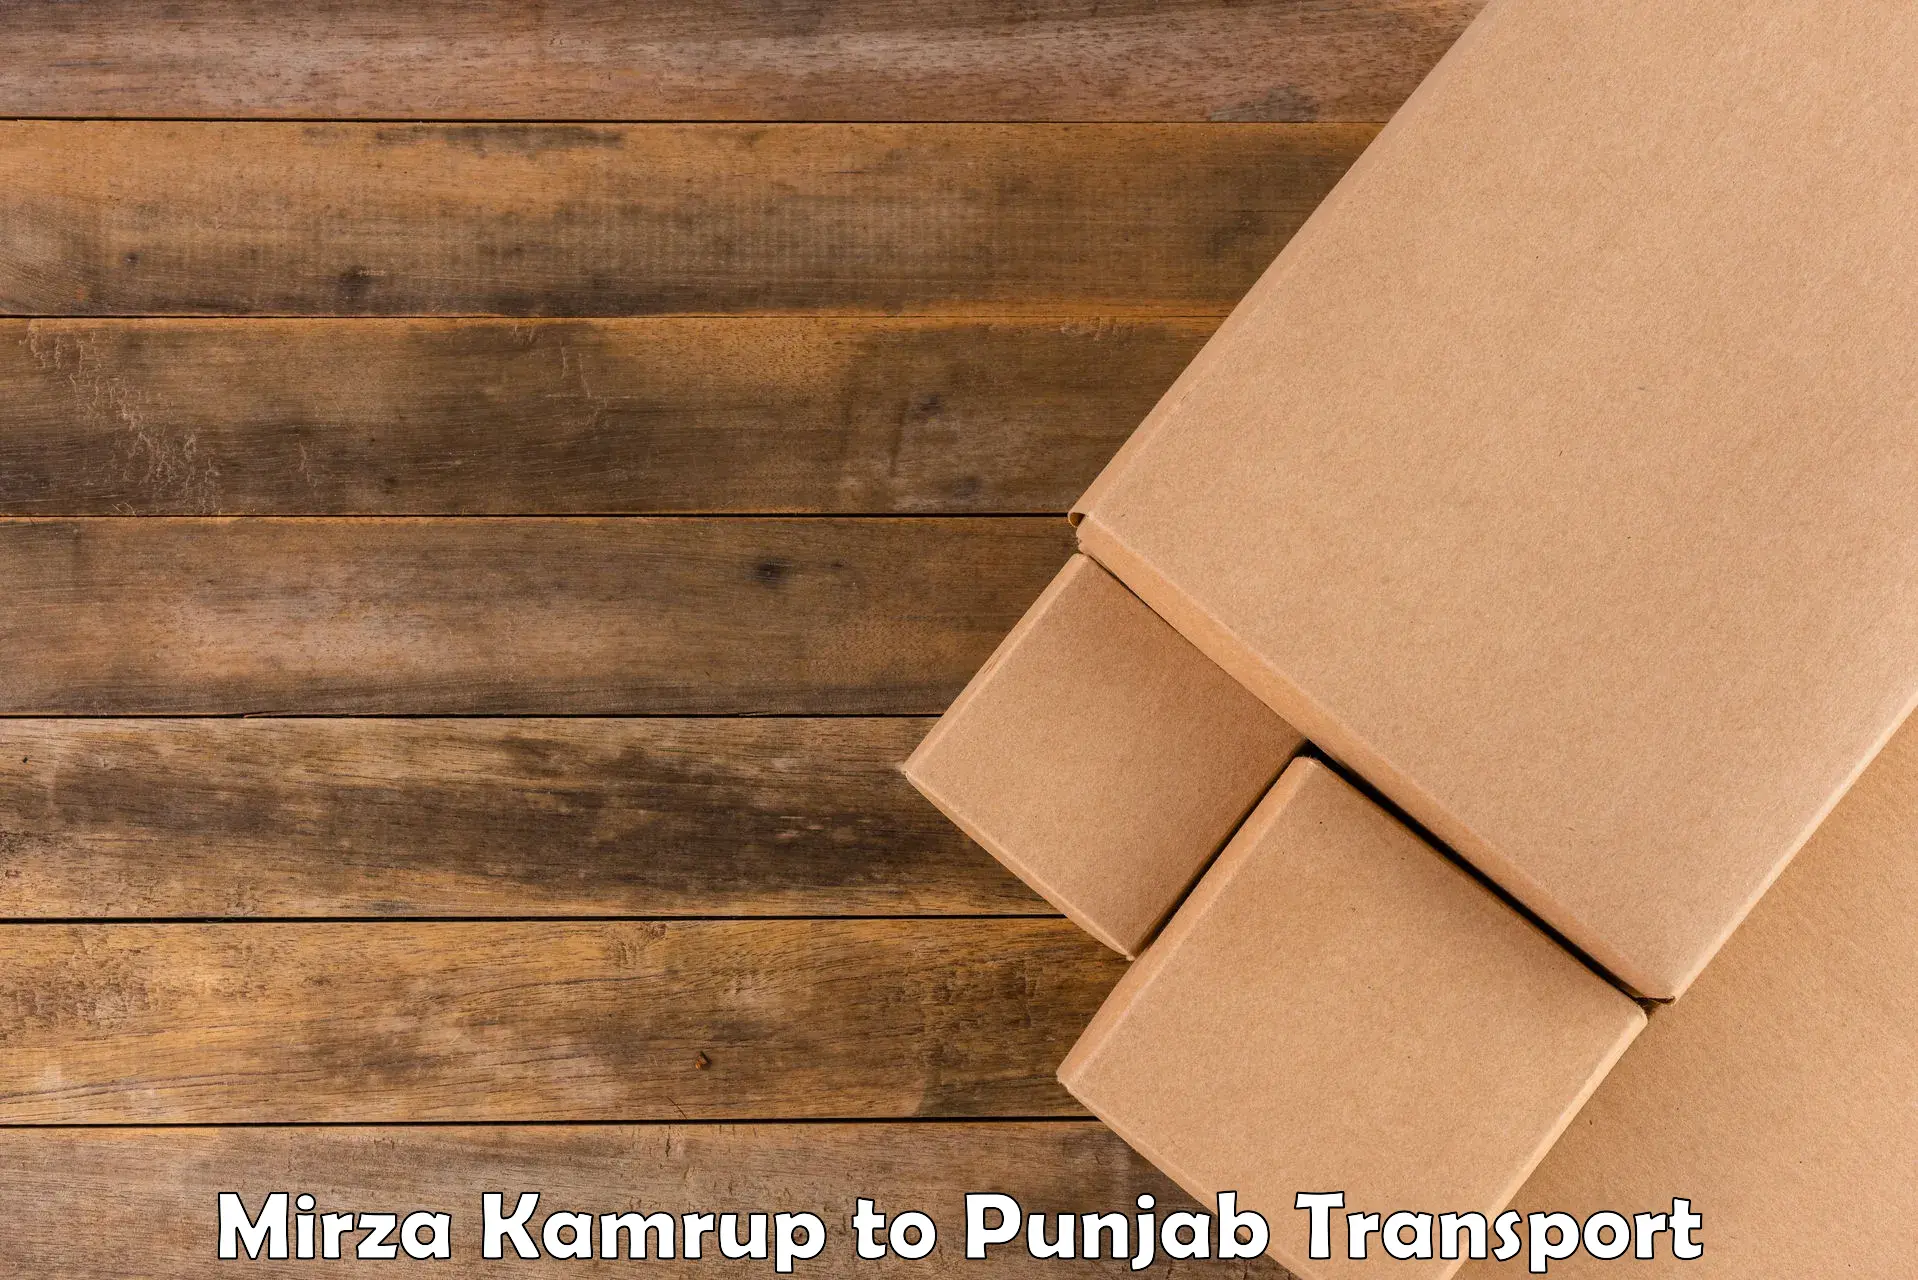 Bike transport service Mirza Kamrup to Zirakpur